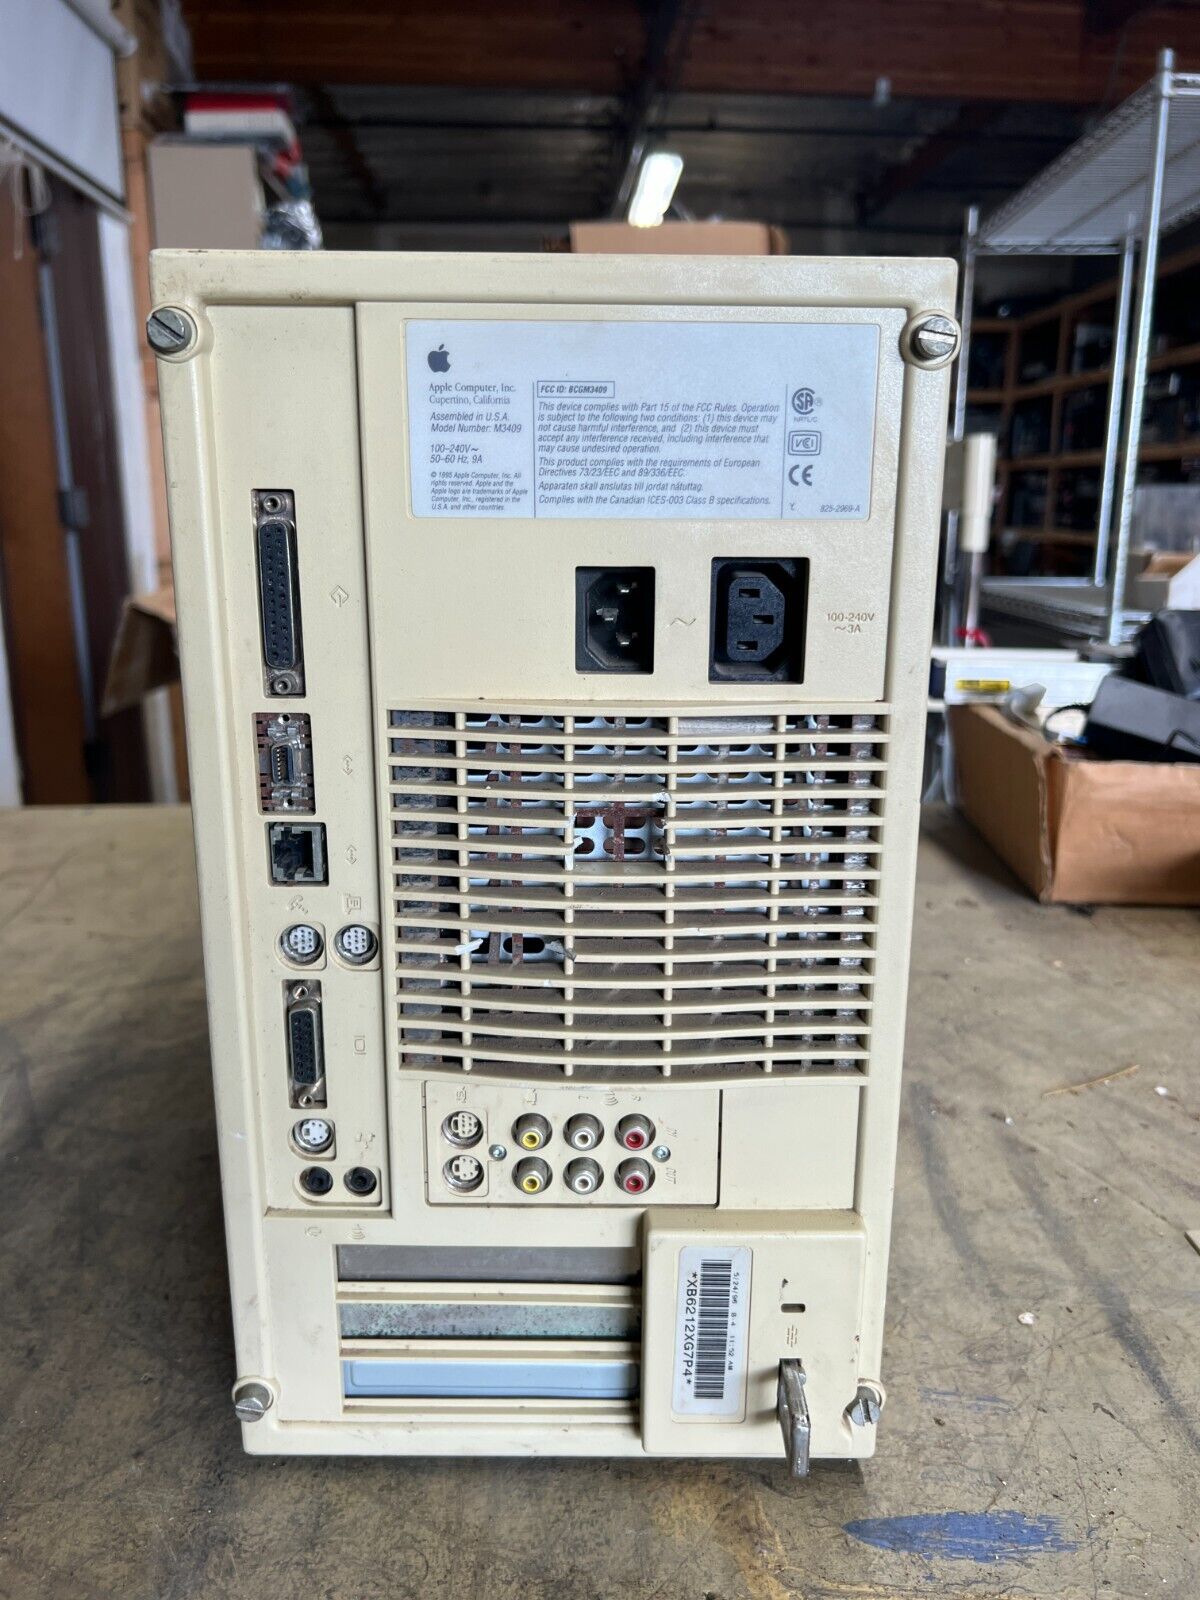 Apple M3409 Power Macintosh Computer 8500/180 Desktop Power PC READ